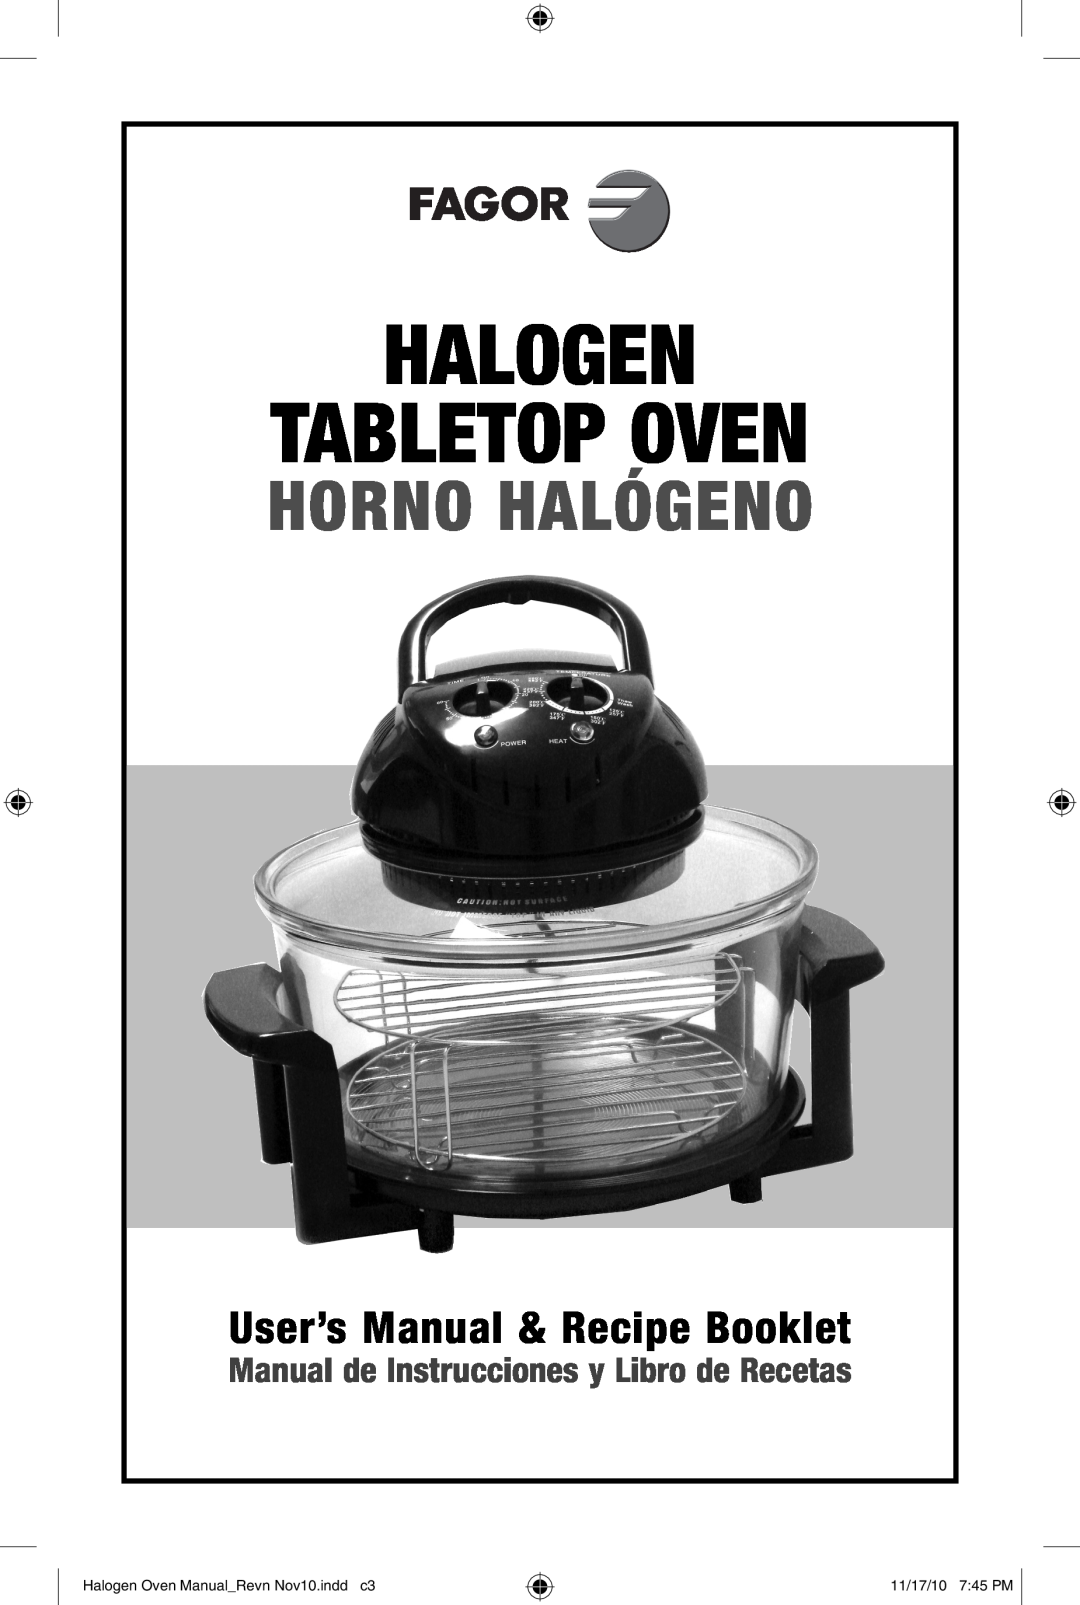 Fagor America 670040380 user manual Halogen Tabletop Oven, Horno Halógeno, User’s Manual & Recipe Booklet, 11/17/10 745 PM 